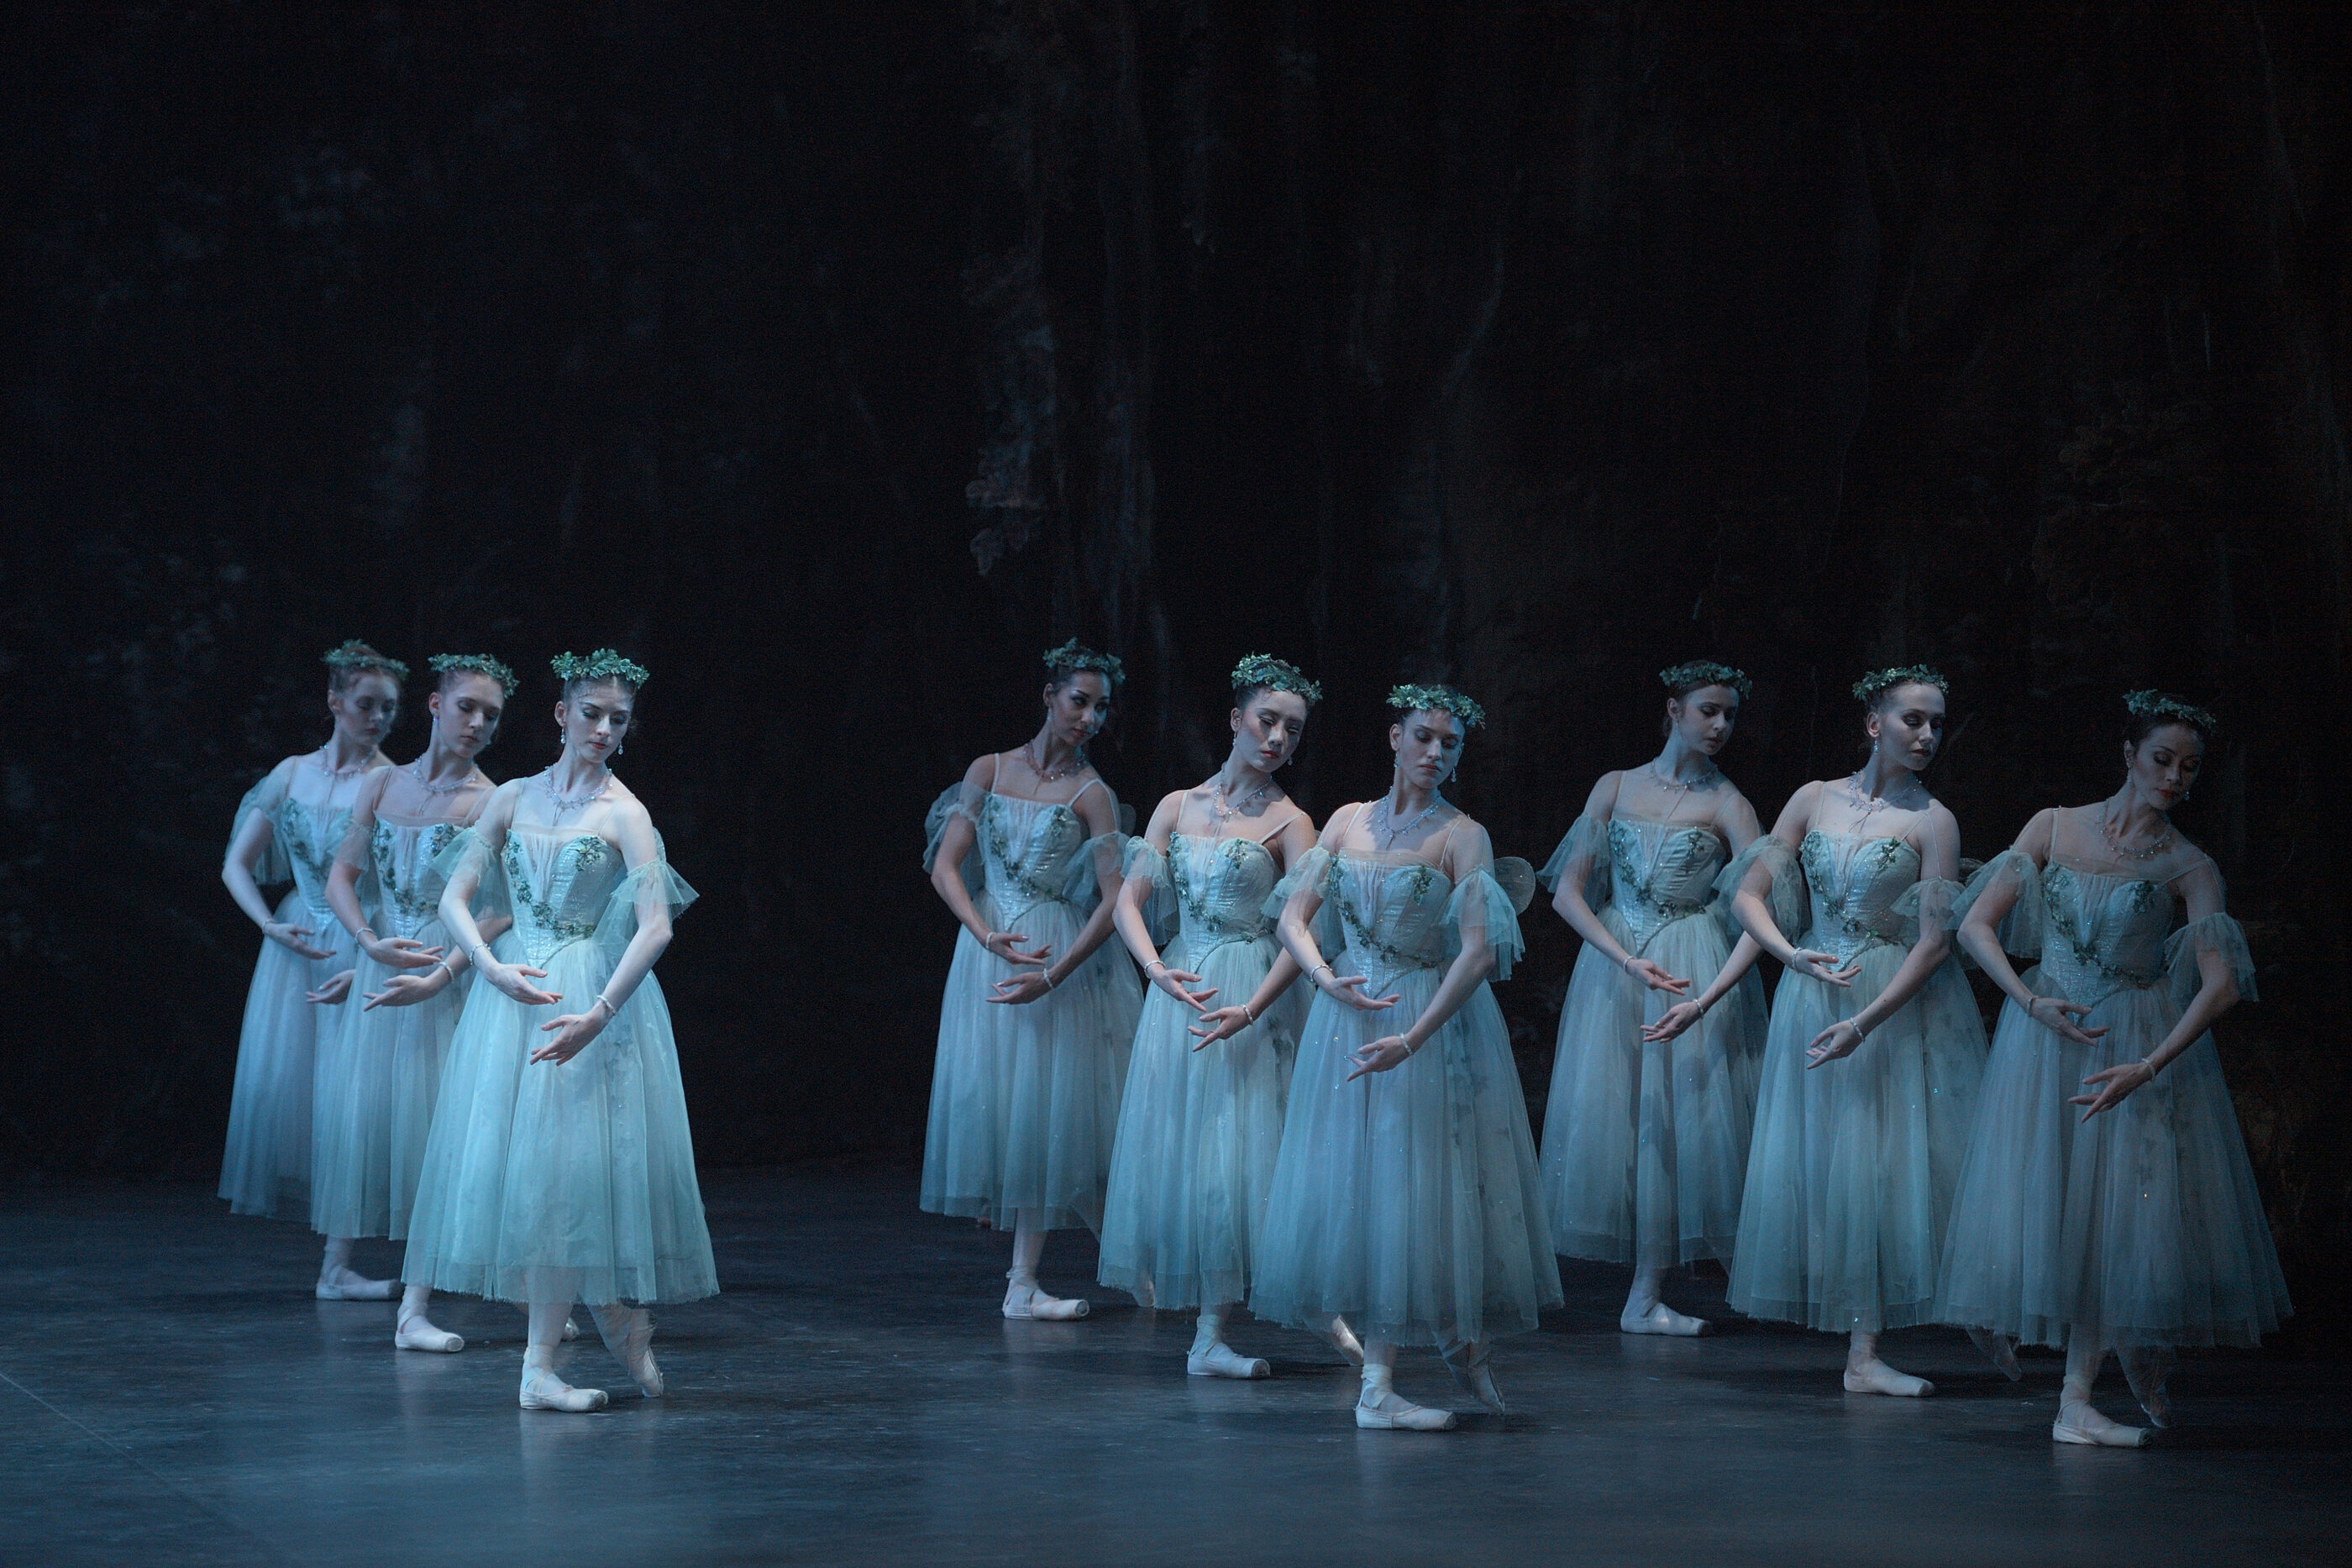 The Wilis corps de ballet in Giselle